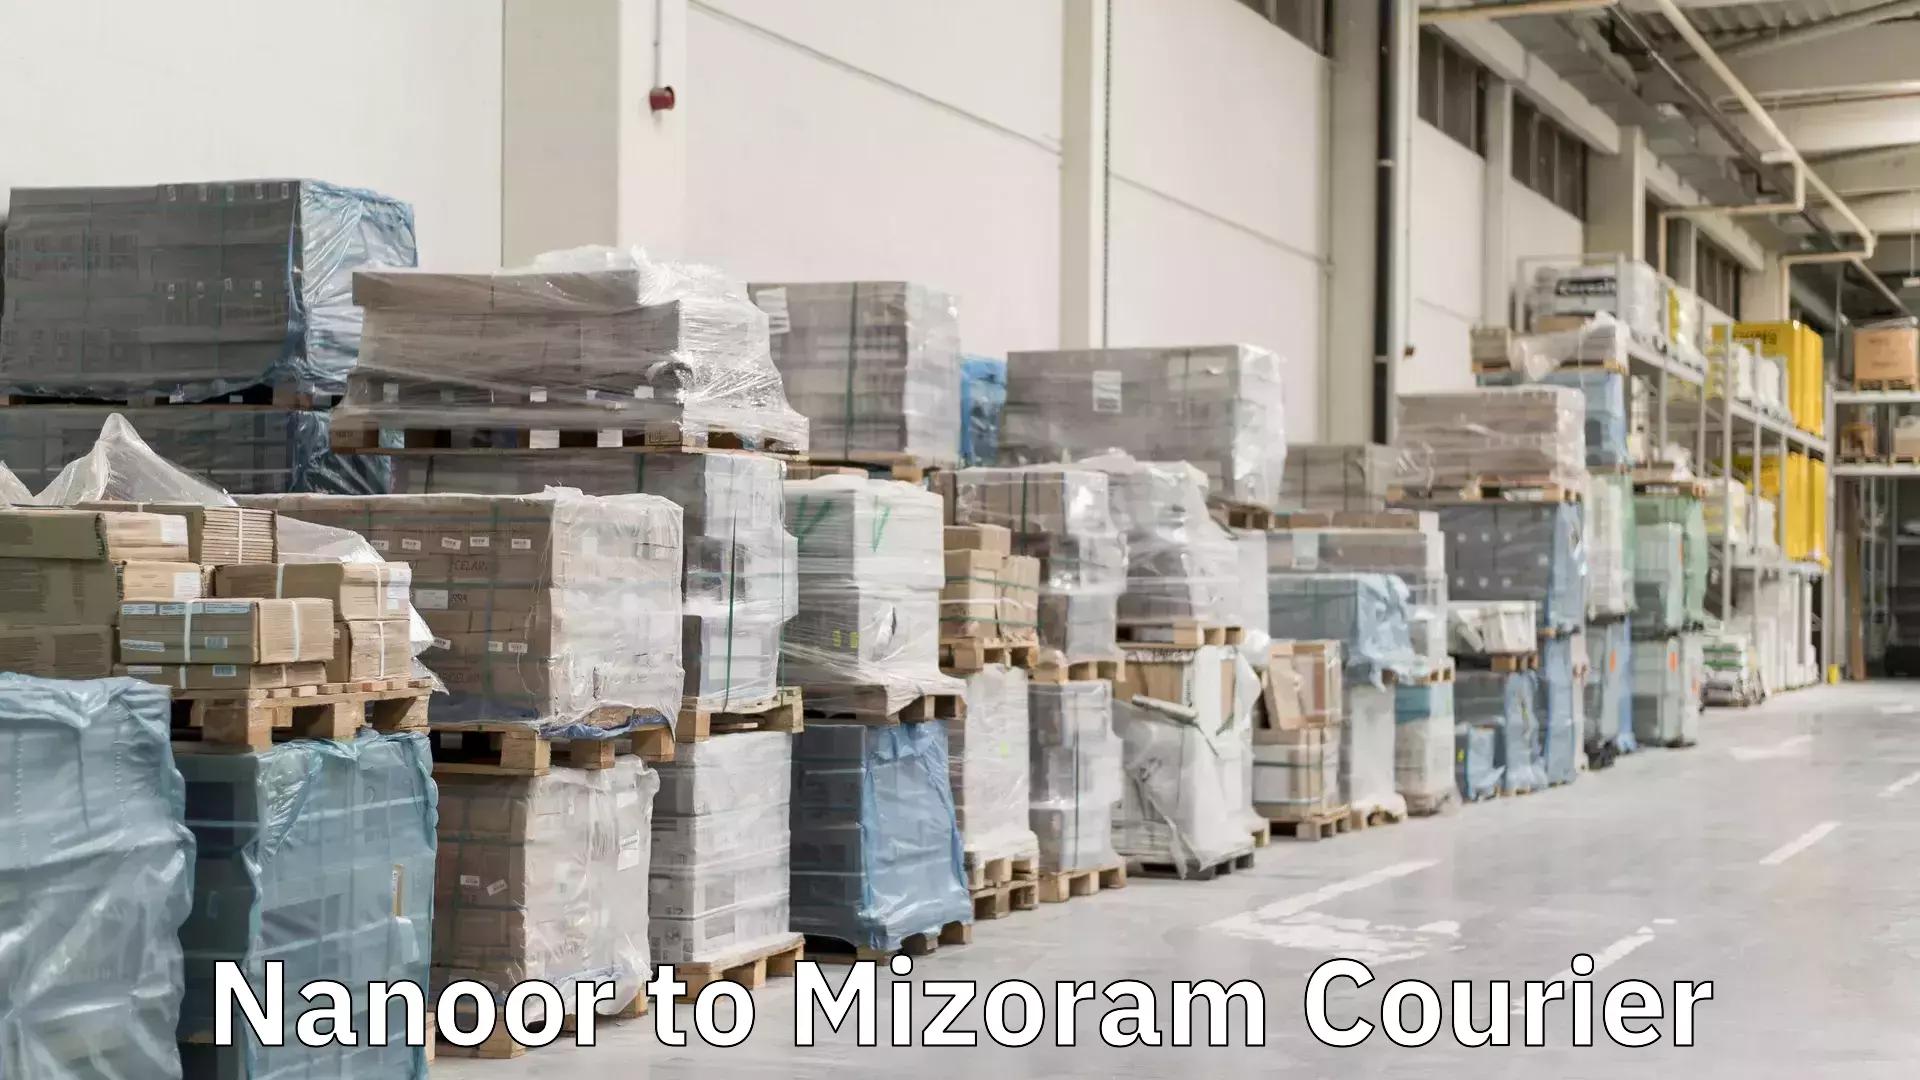 International parcel service Nanoor to Mizoram